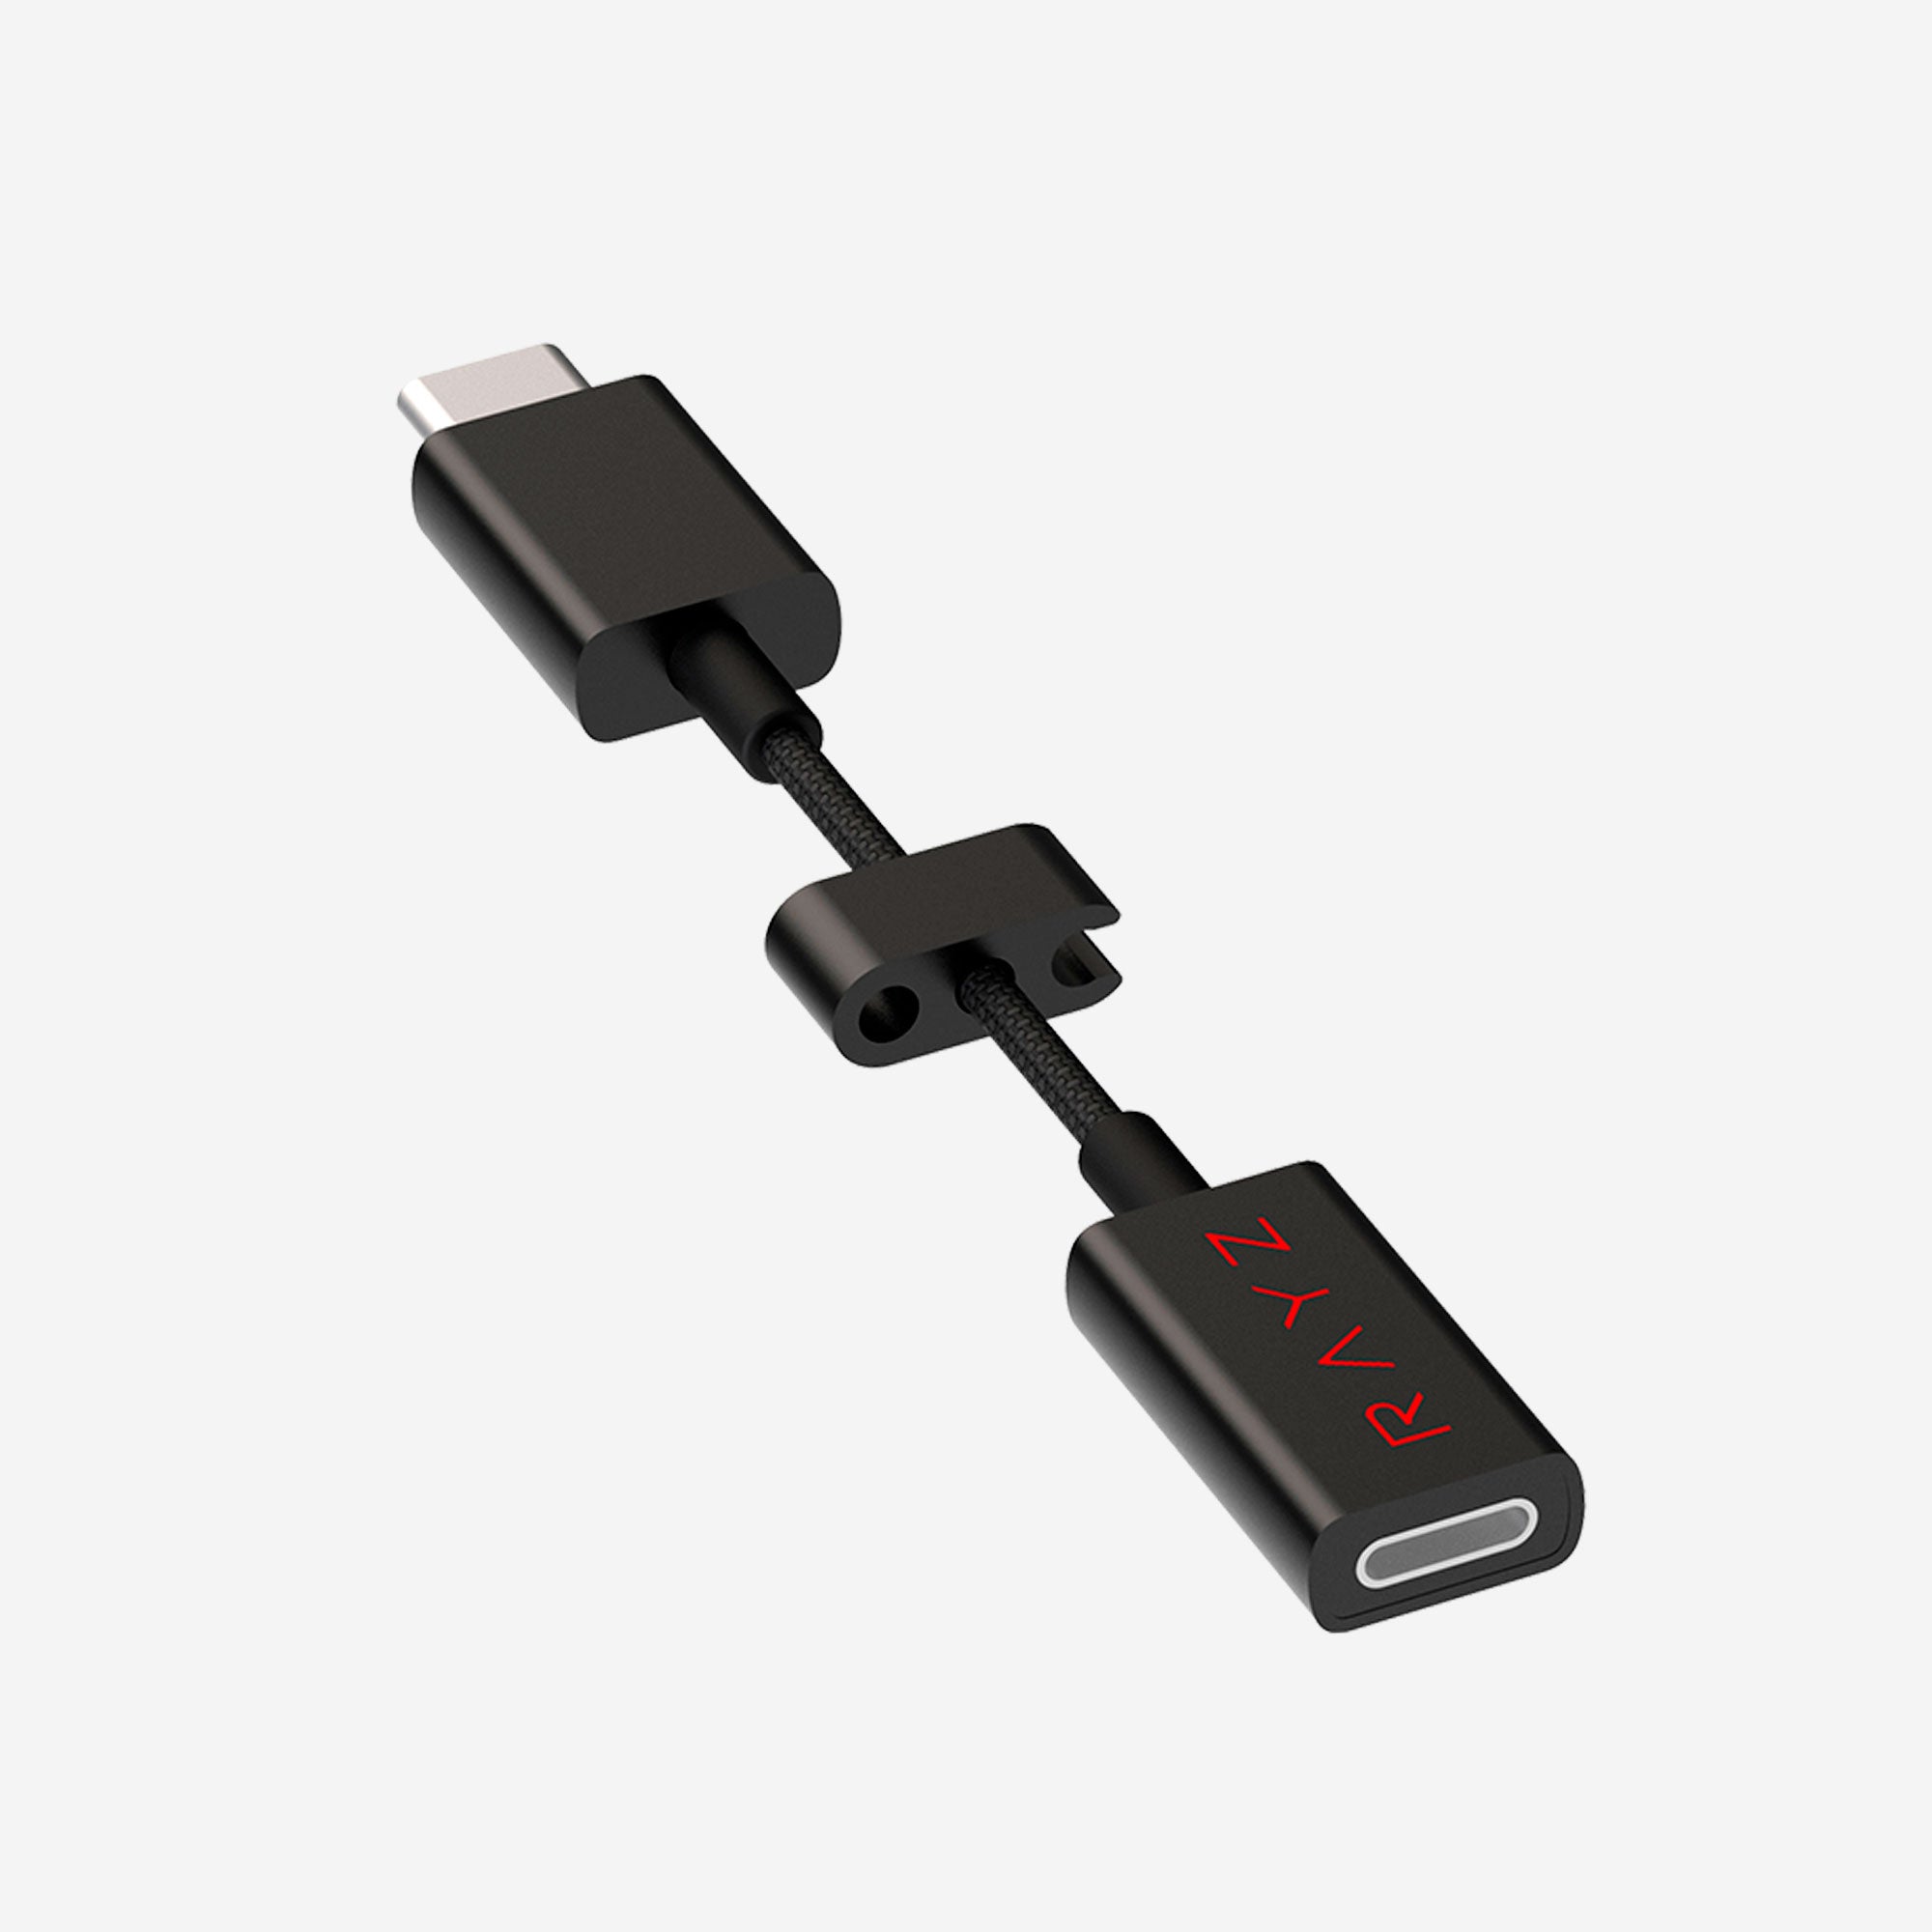 Portable Lightning to USB-C OTG Adapter